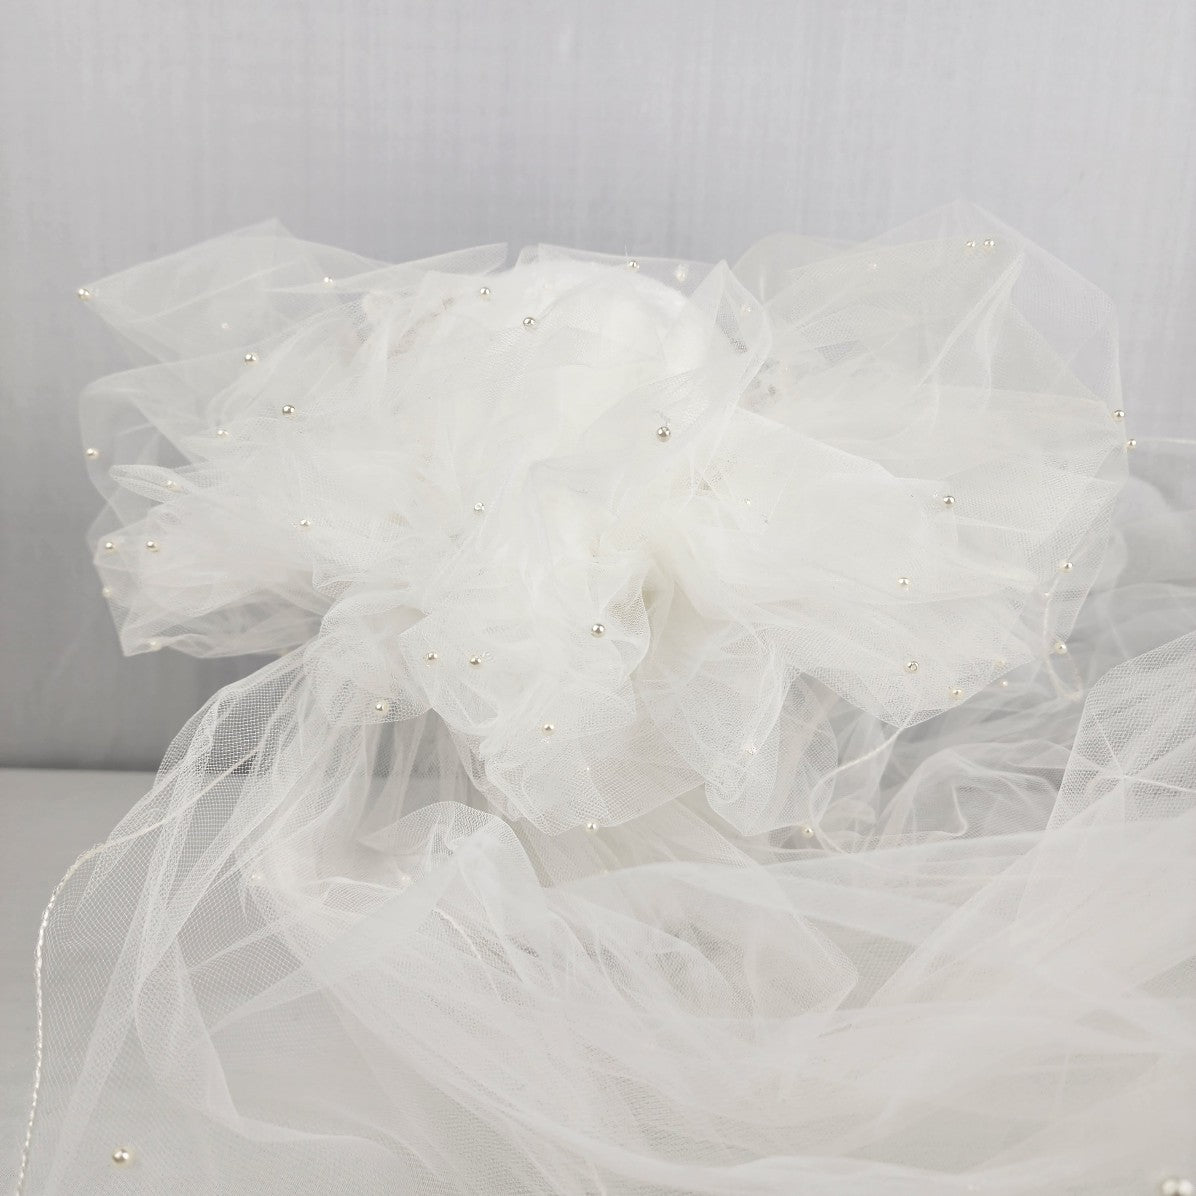 Vintage Beaded Sequined Floral Crystal Wedding Veil